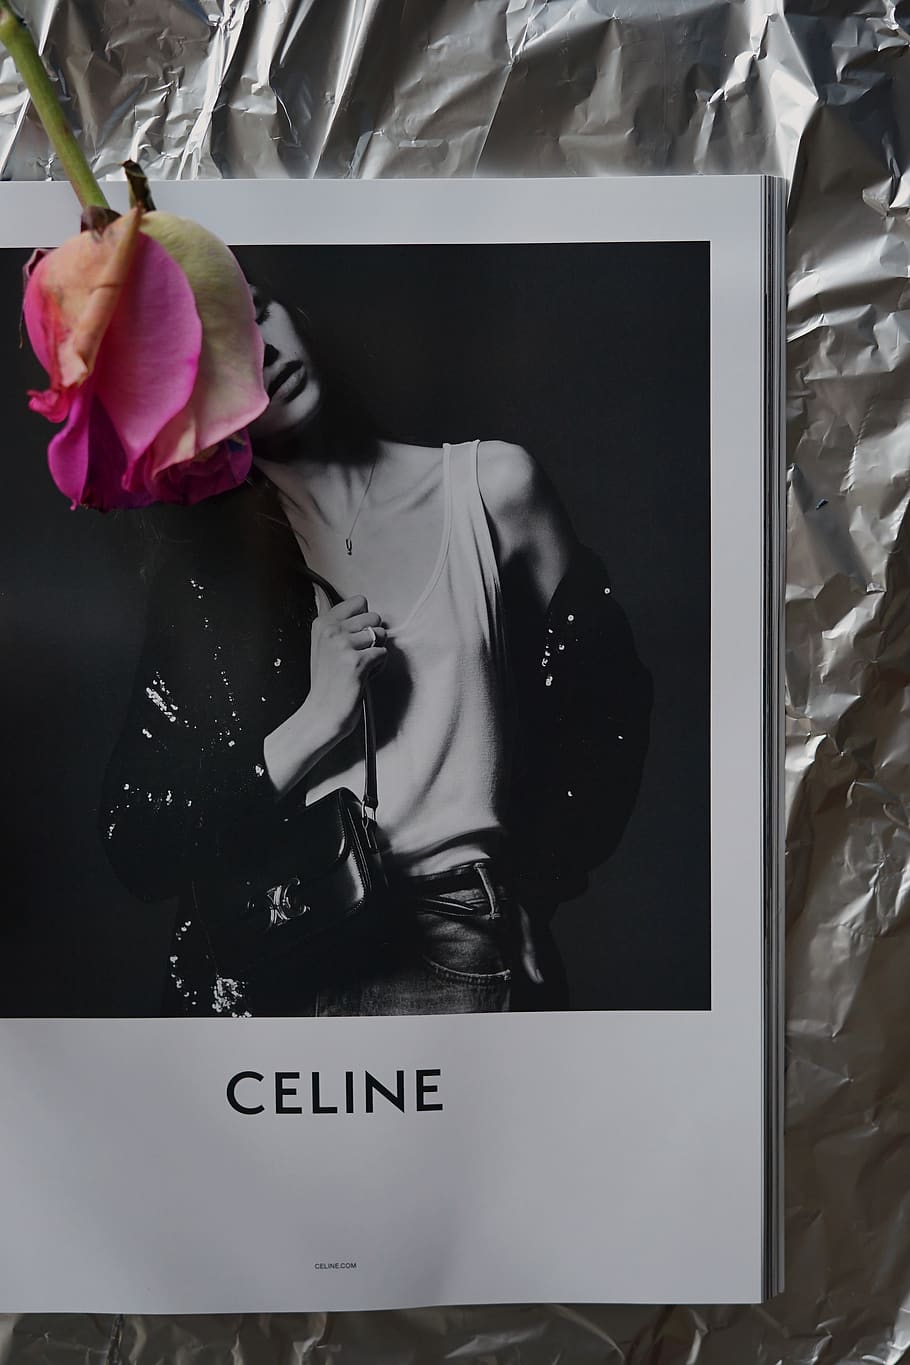 Hd Wallpaper Celine Album Apparel Clothing Human Person Plant Blossom Wallpaper Flare